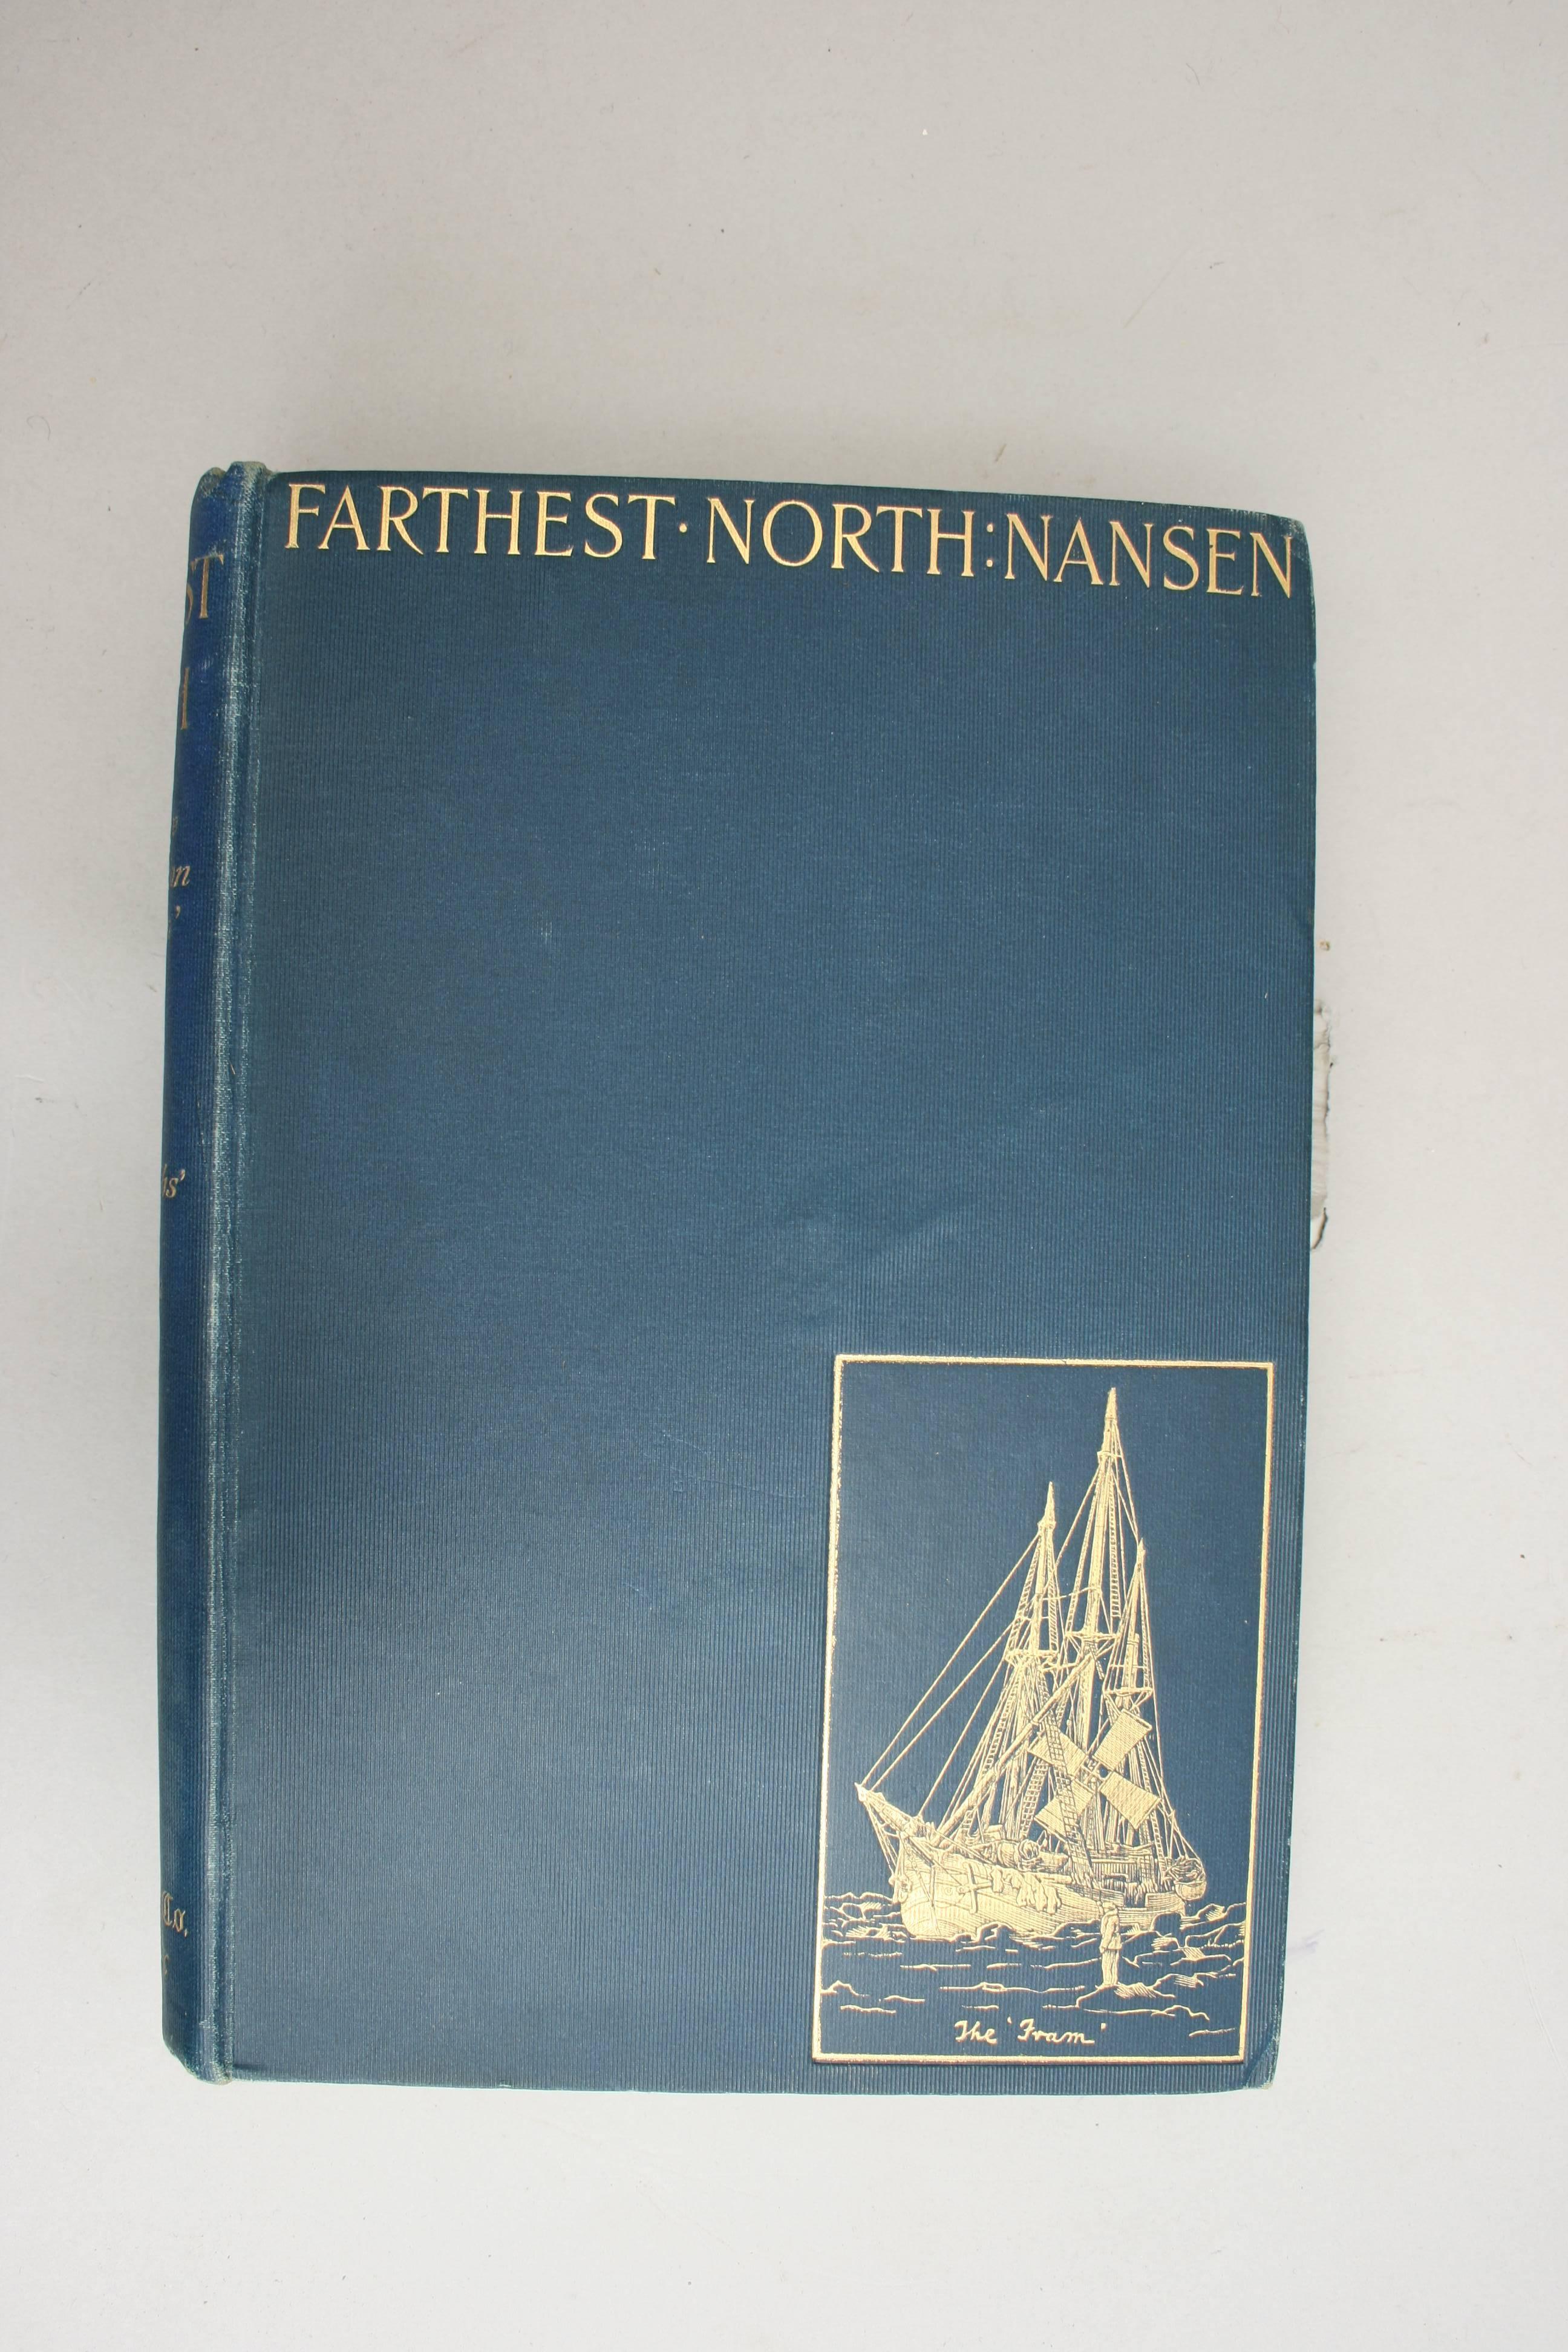 Late 19th Century Voyage and Exploration Books, Fridtjof Nansen